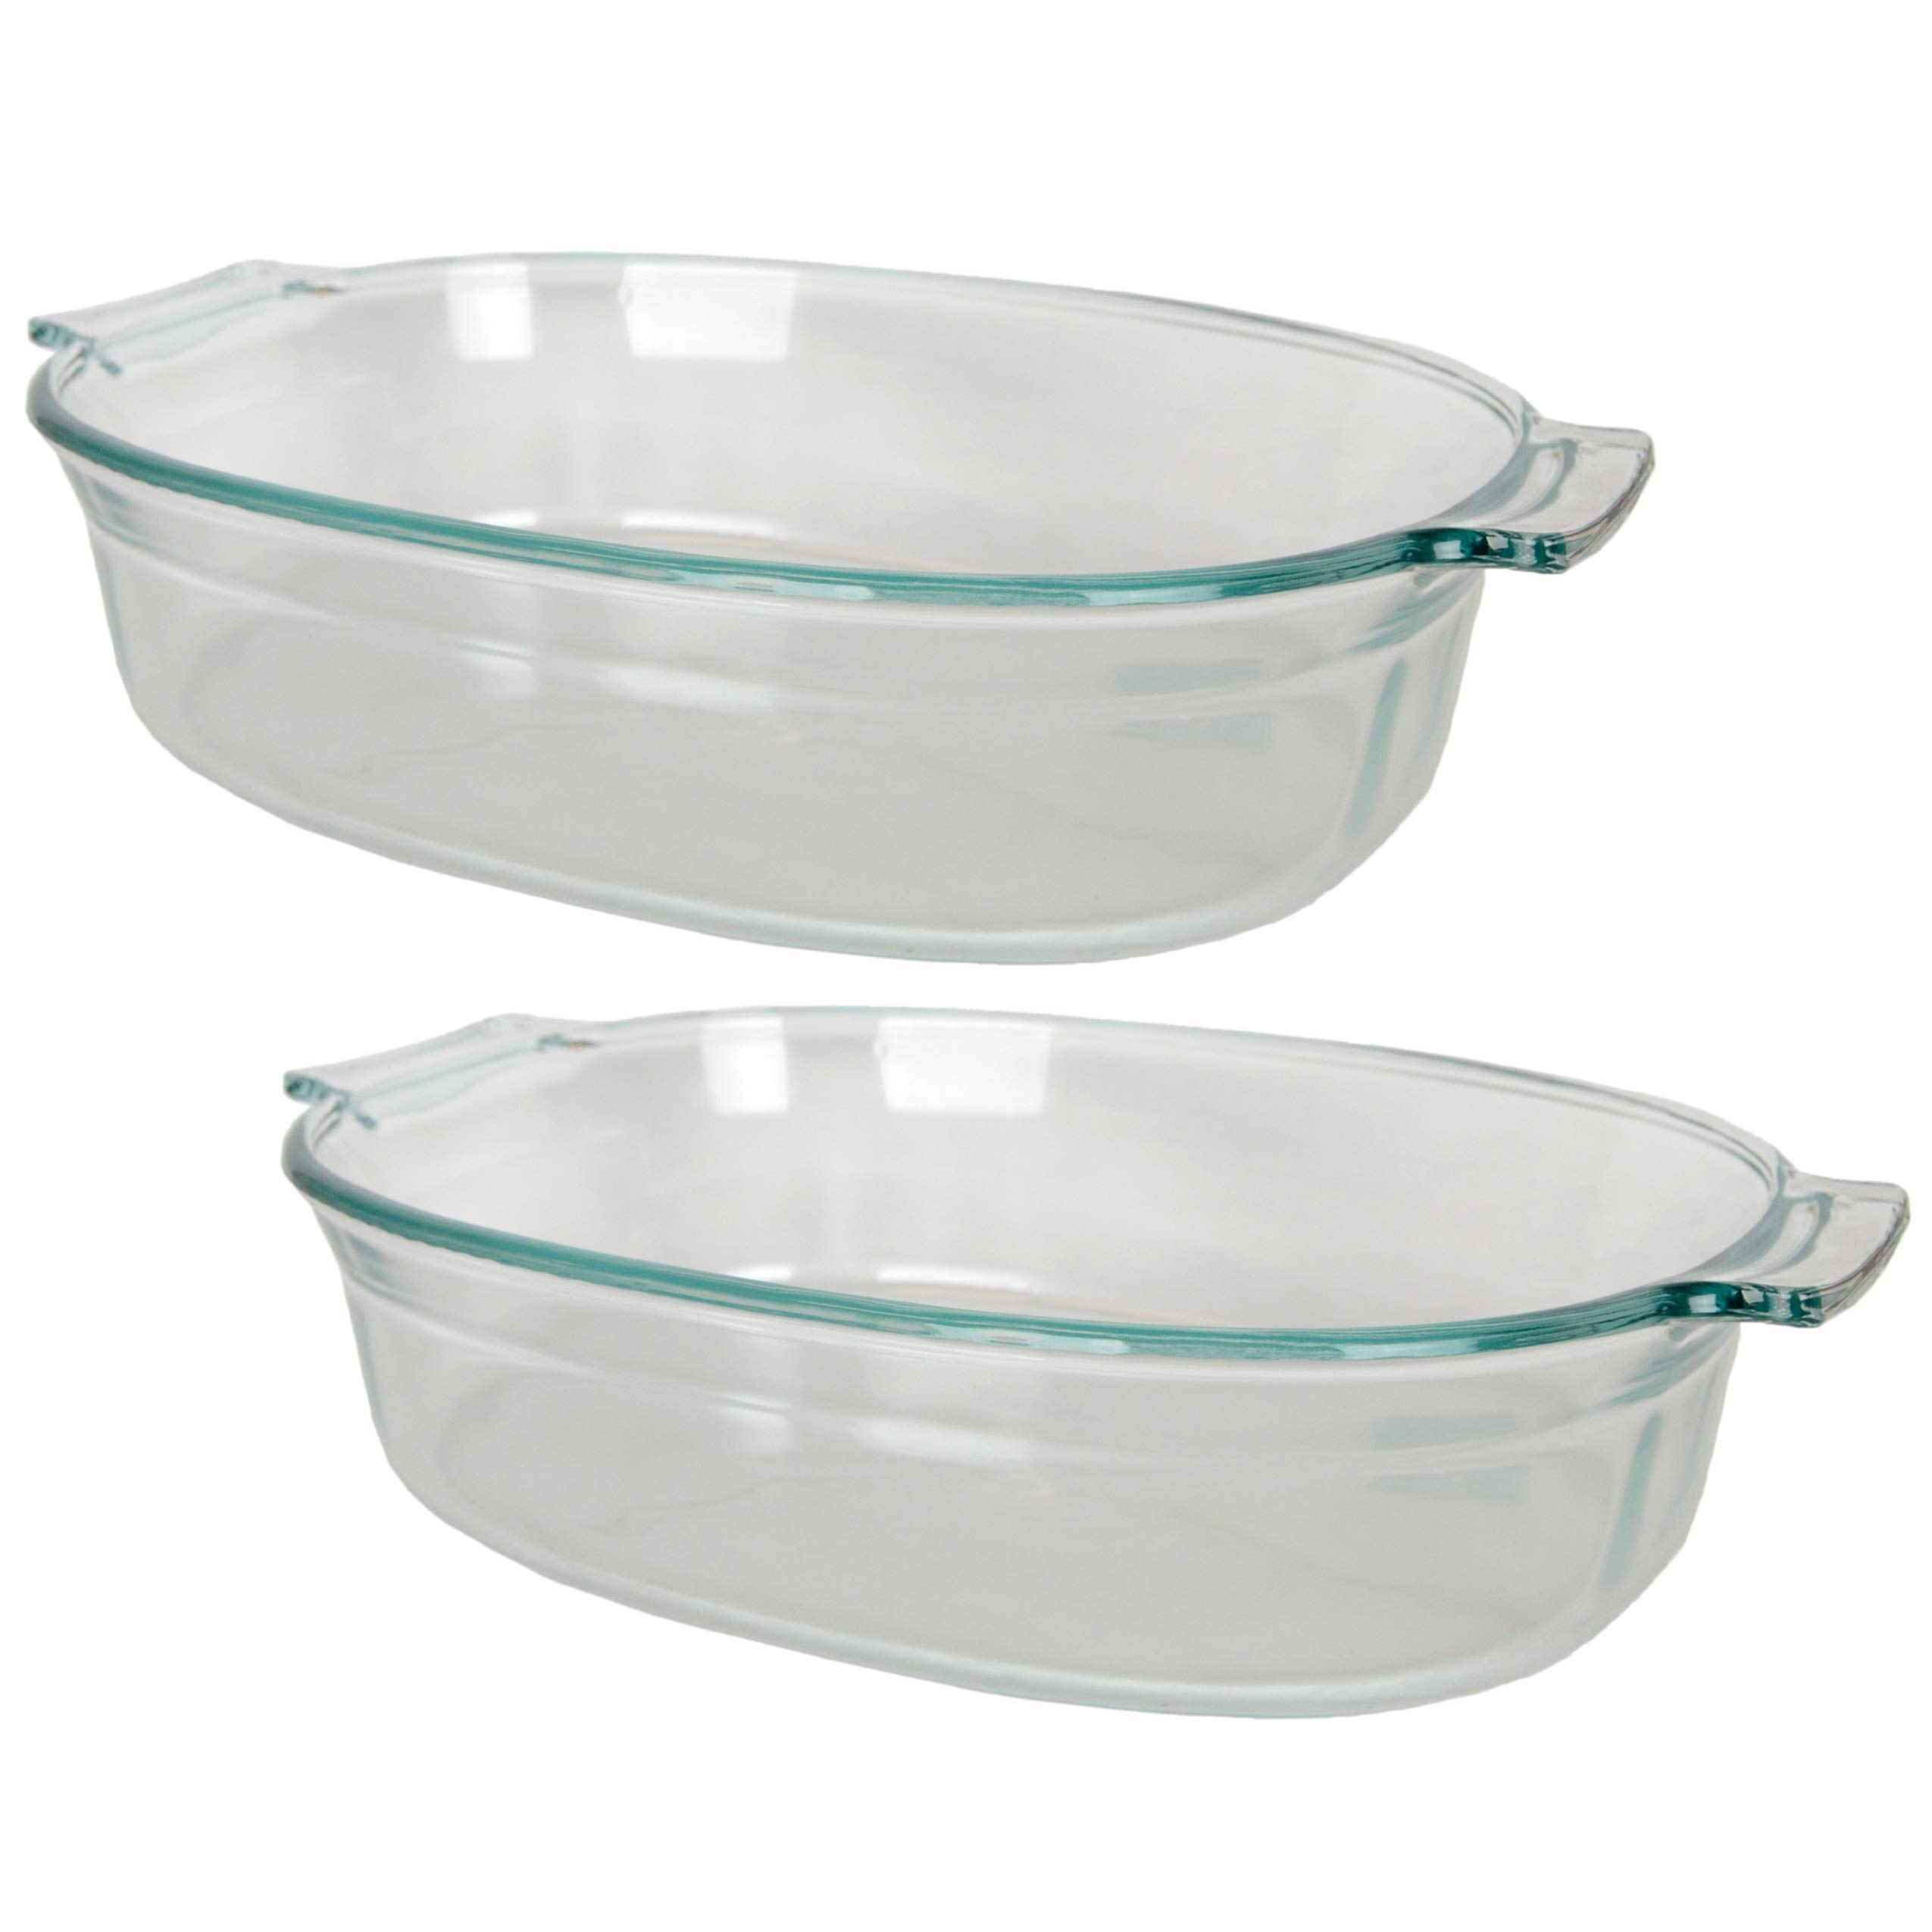 Pyrex 702 25 Quart Roaster glass Dish - 2 Pack